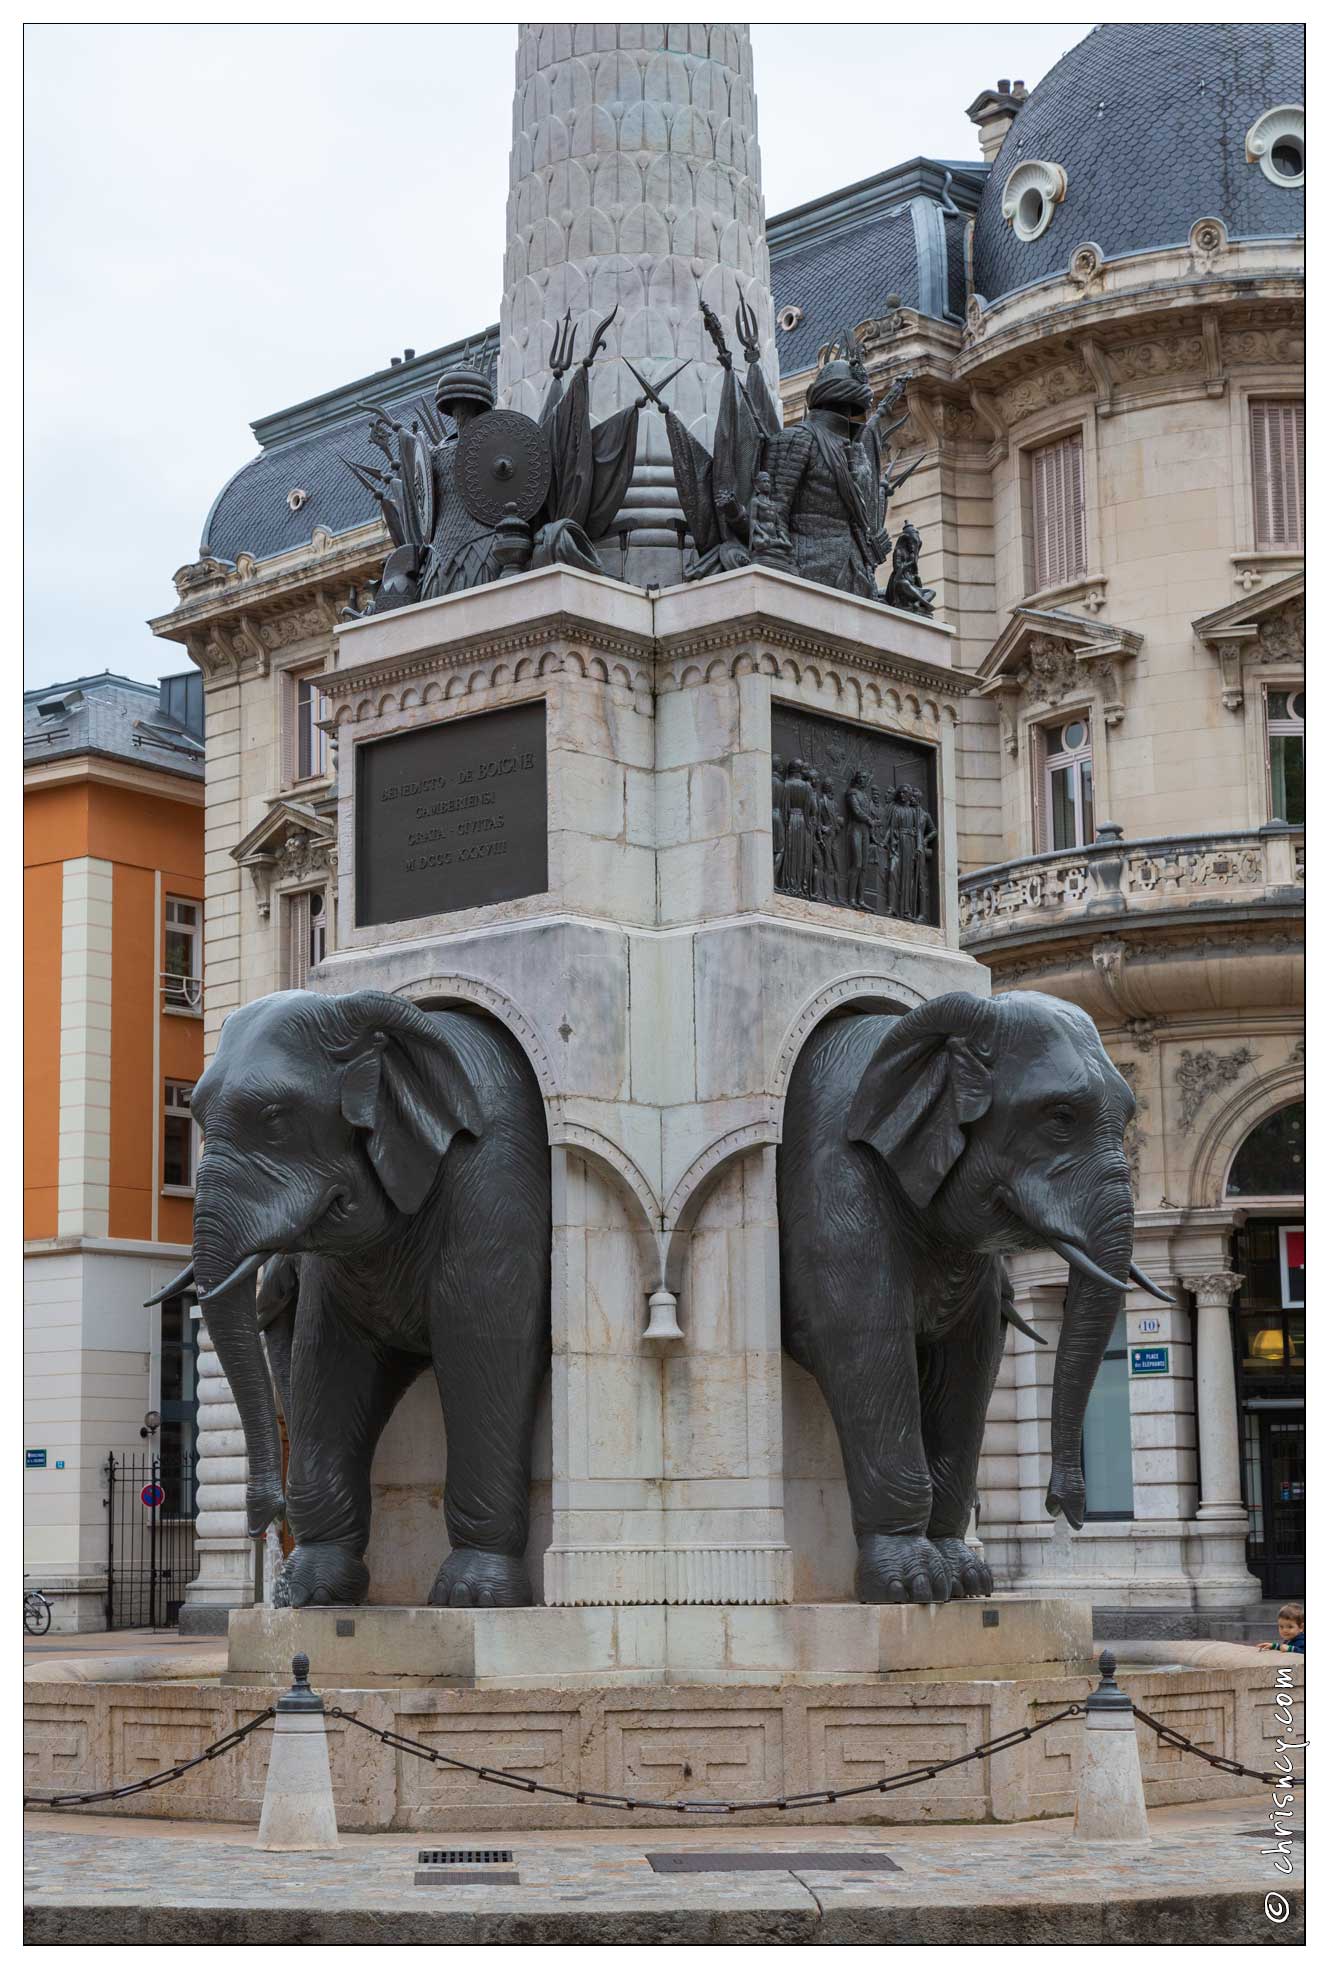 20190822-08_8276-Chambery_fontaine_des_elephants.jpg